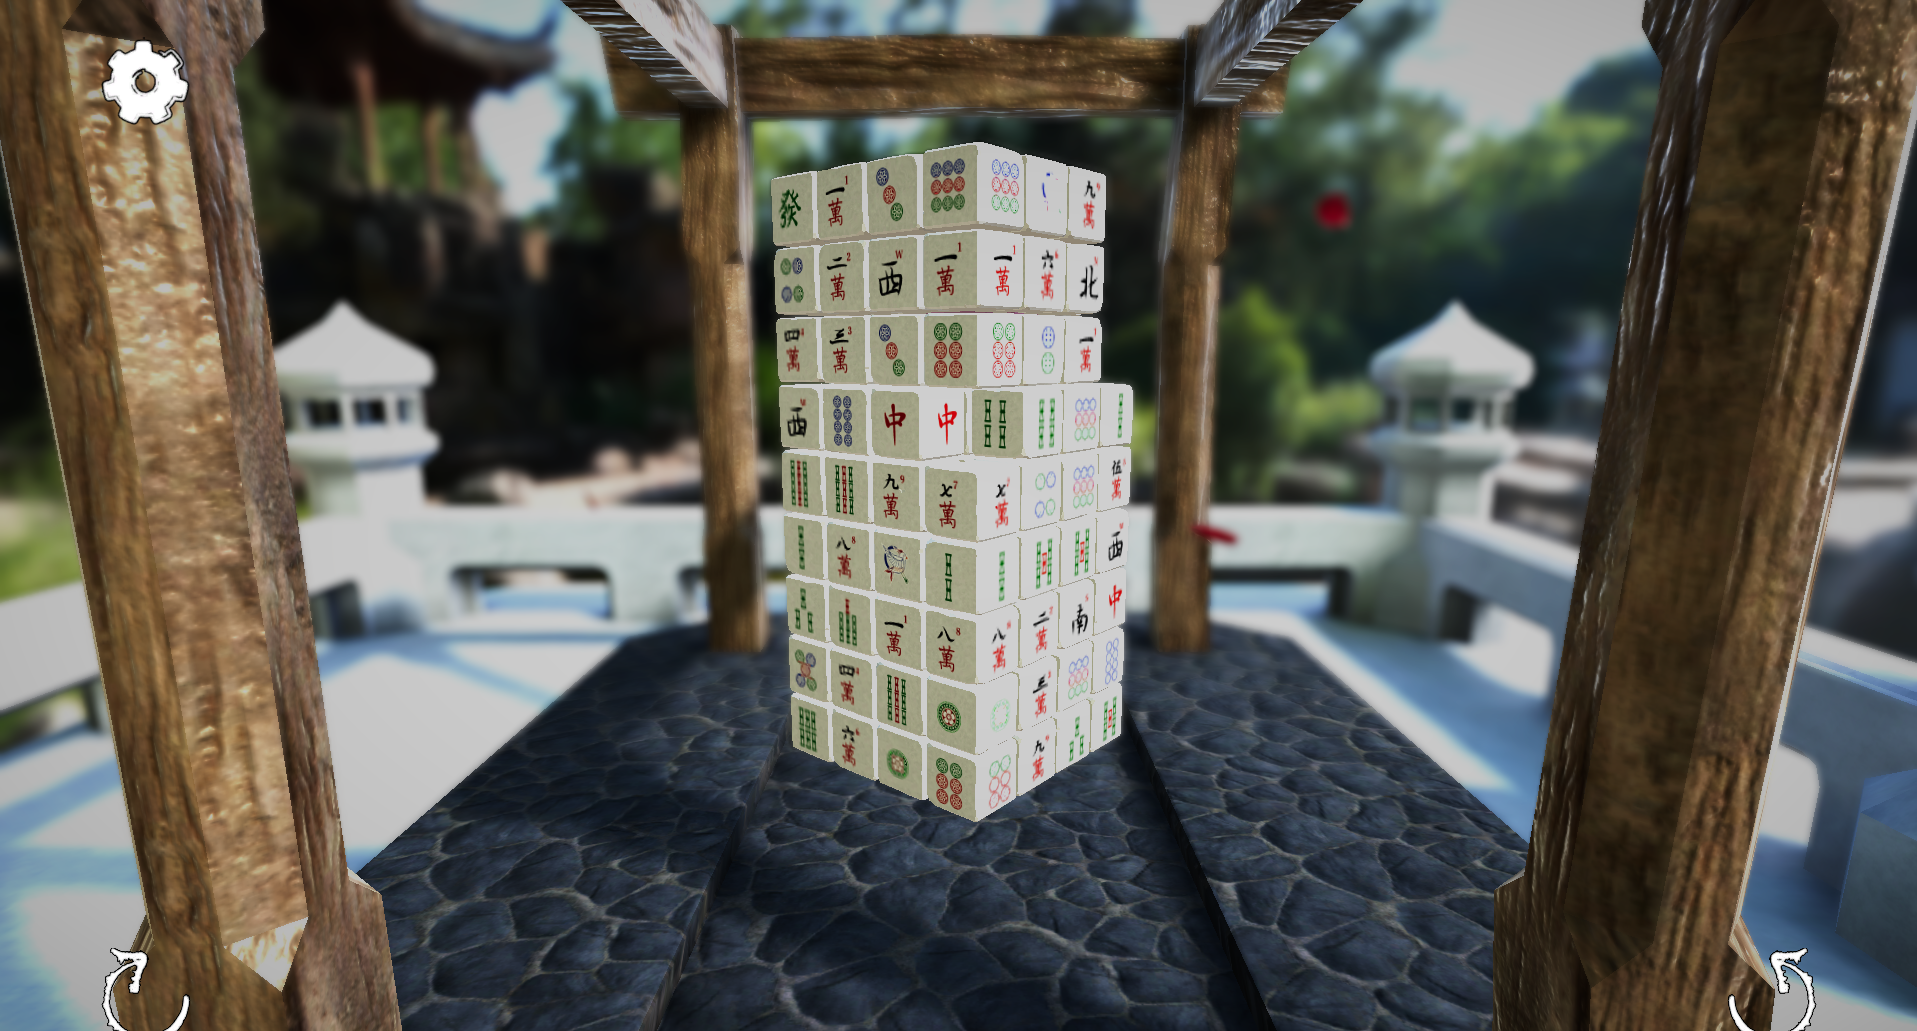 Mahjong 3D: Play Mahjong 3D for free on LittleGames